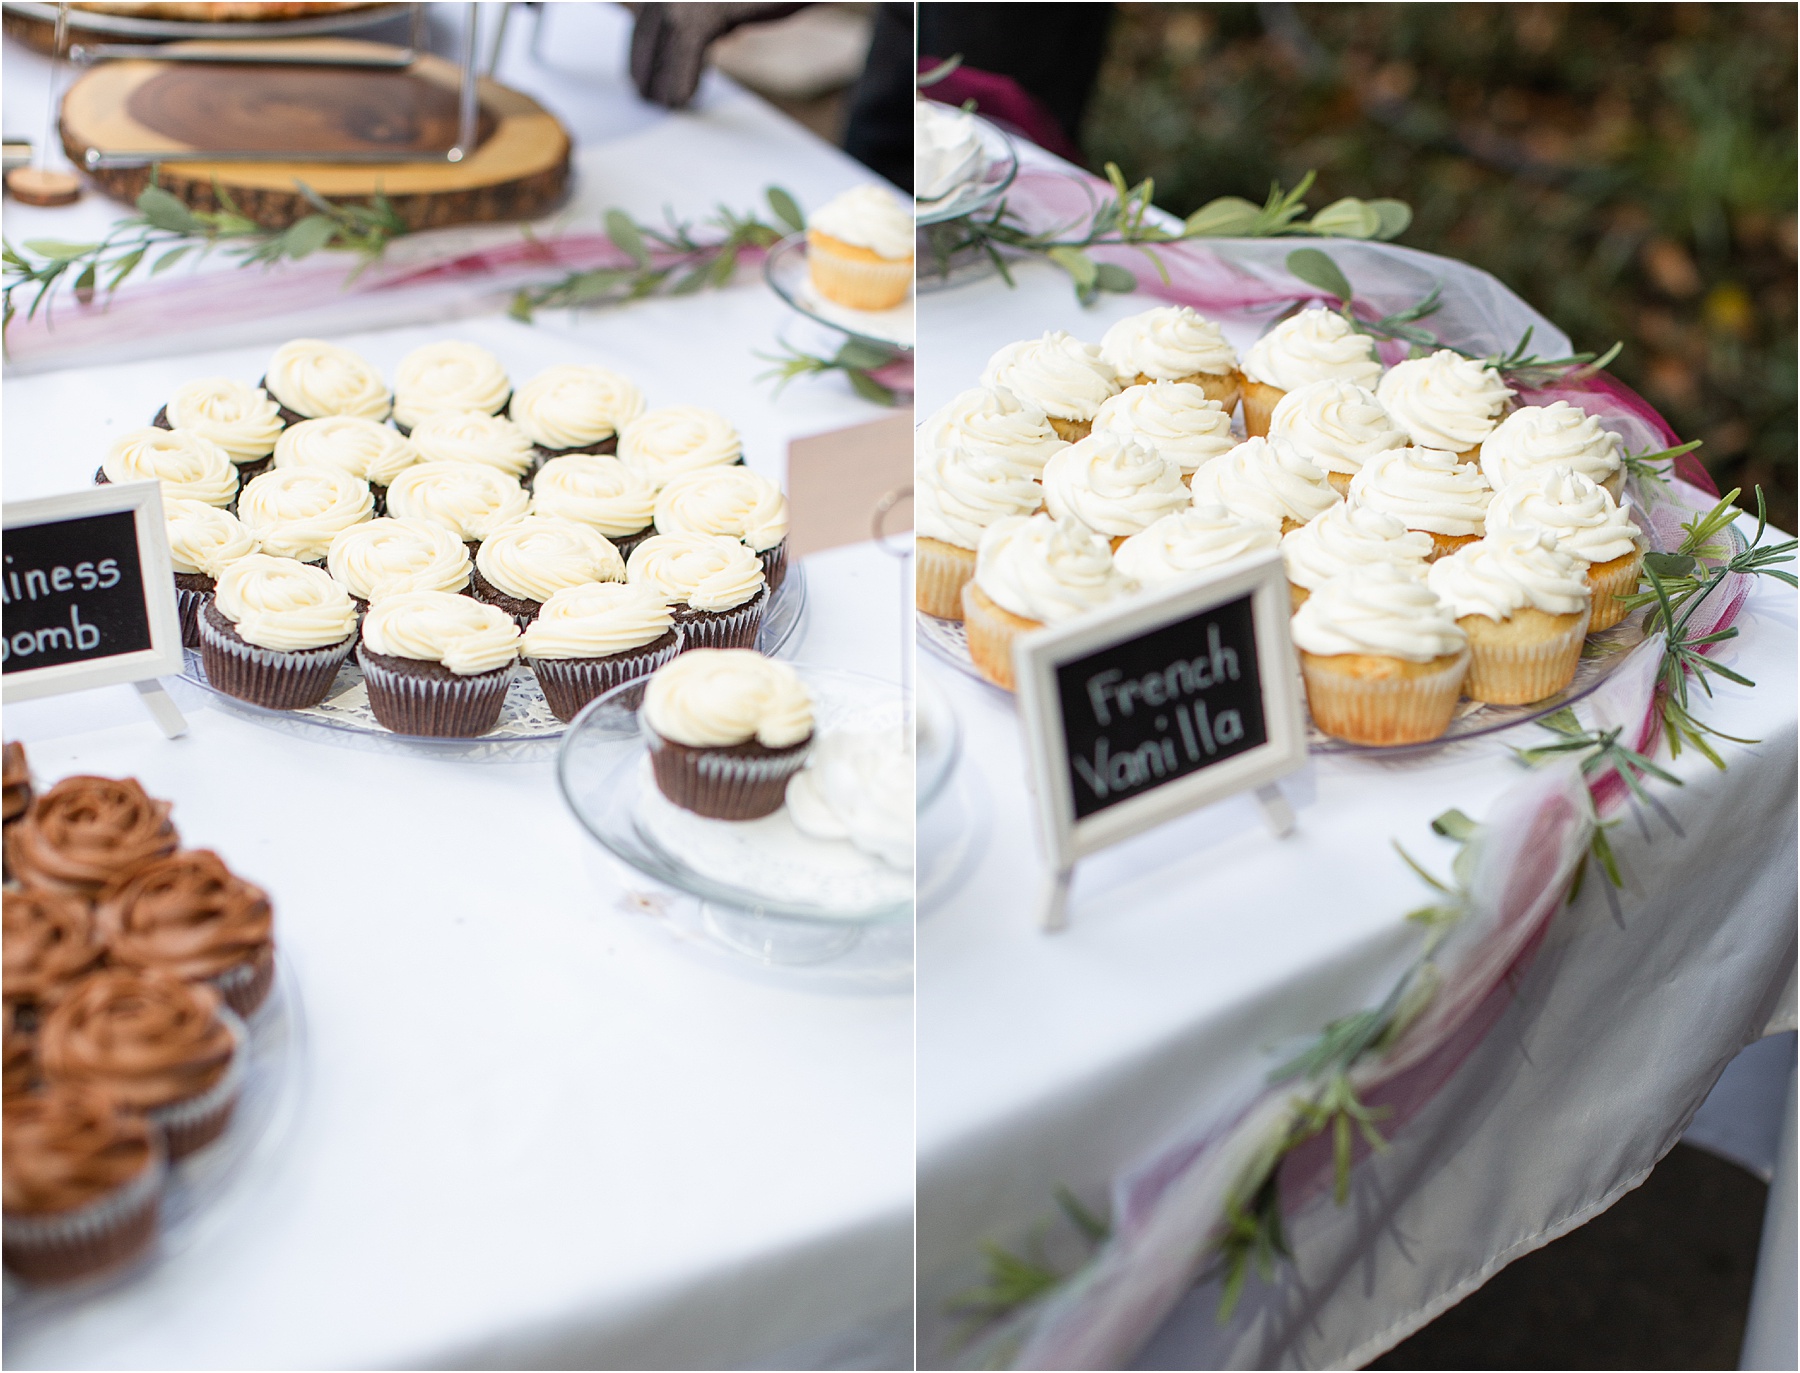 chocolate and vanilla cupcakes at a wedding reception